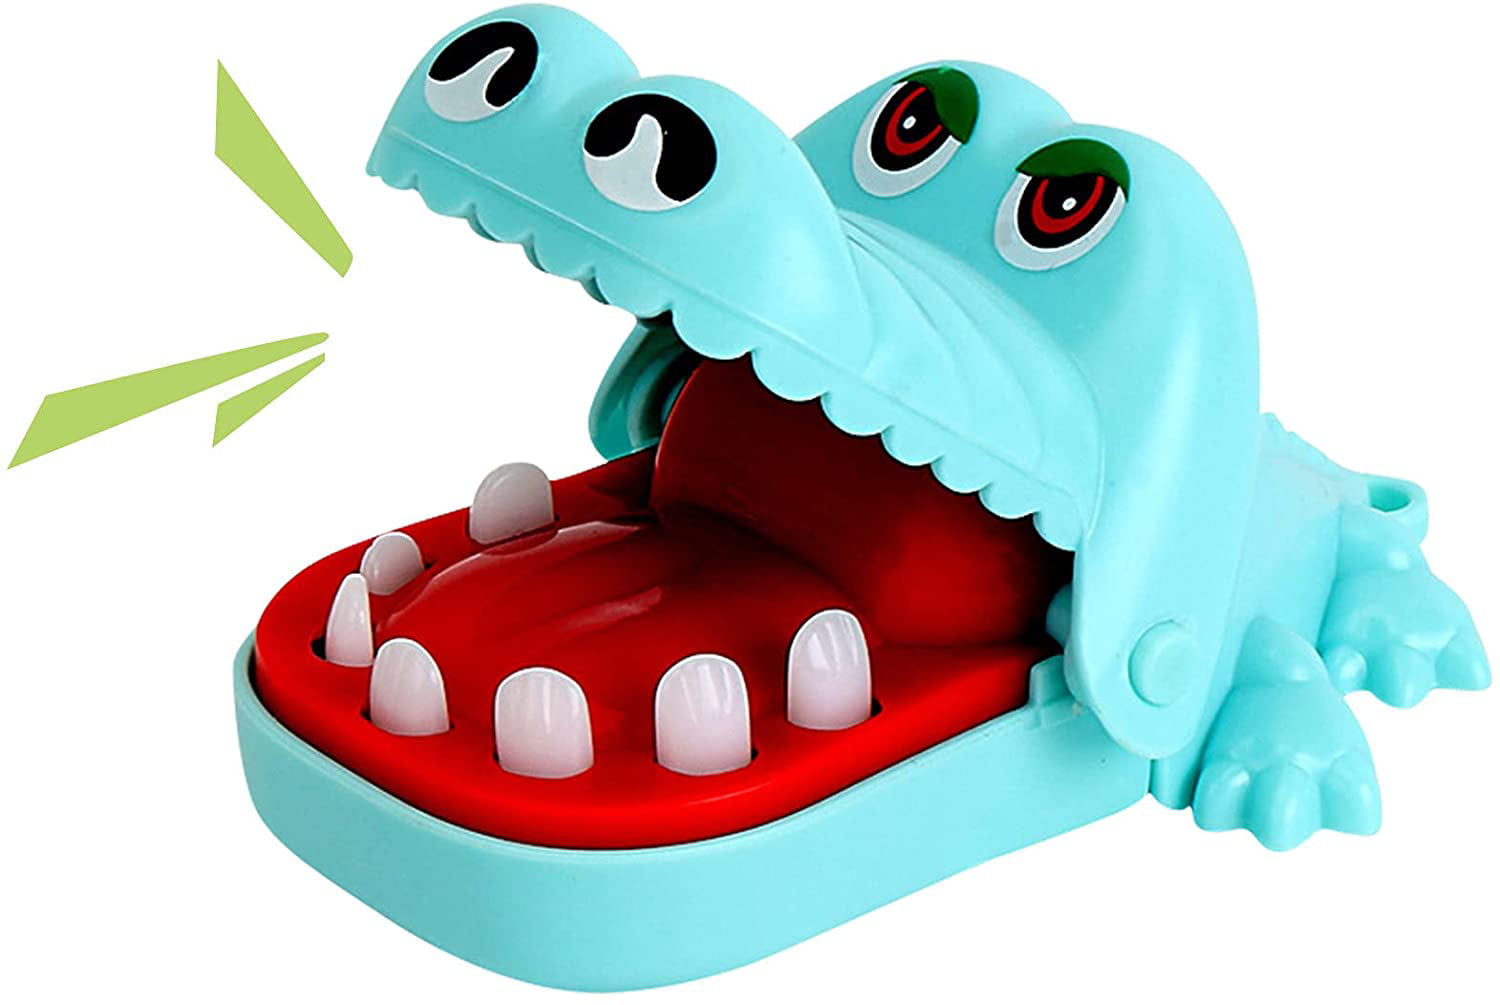 Biting Crazy Dinosaur Family Party Game Press The Teeth & Bit Fun Girls Boys Toy 